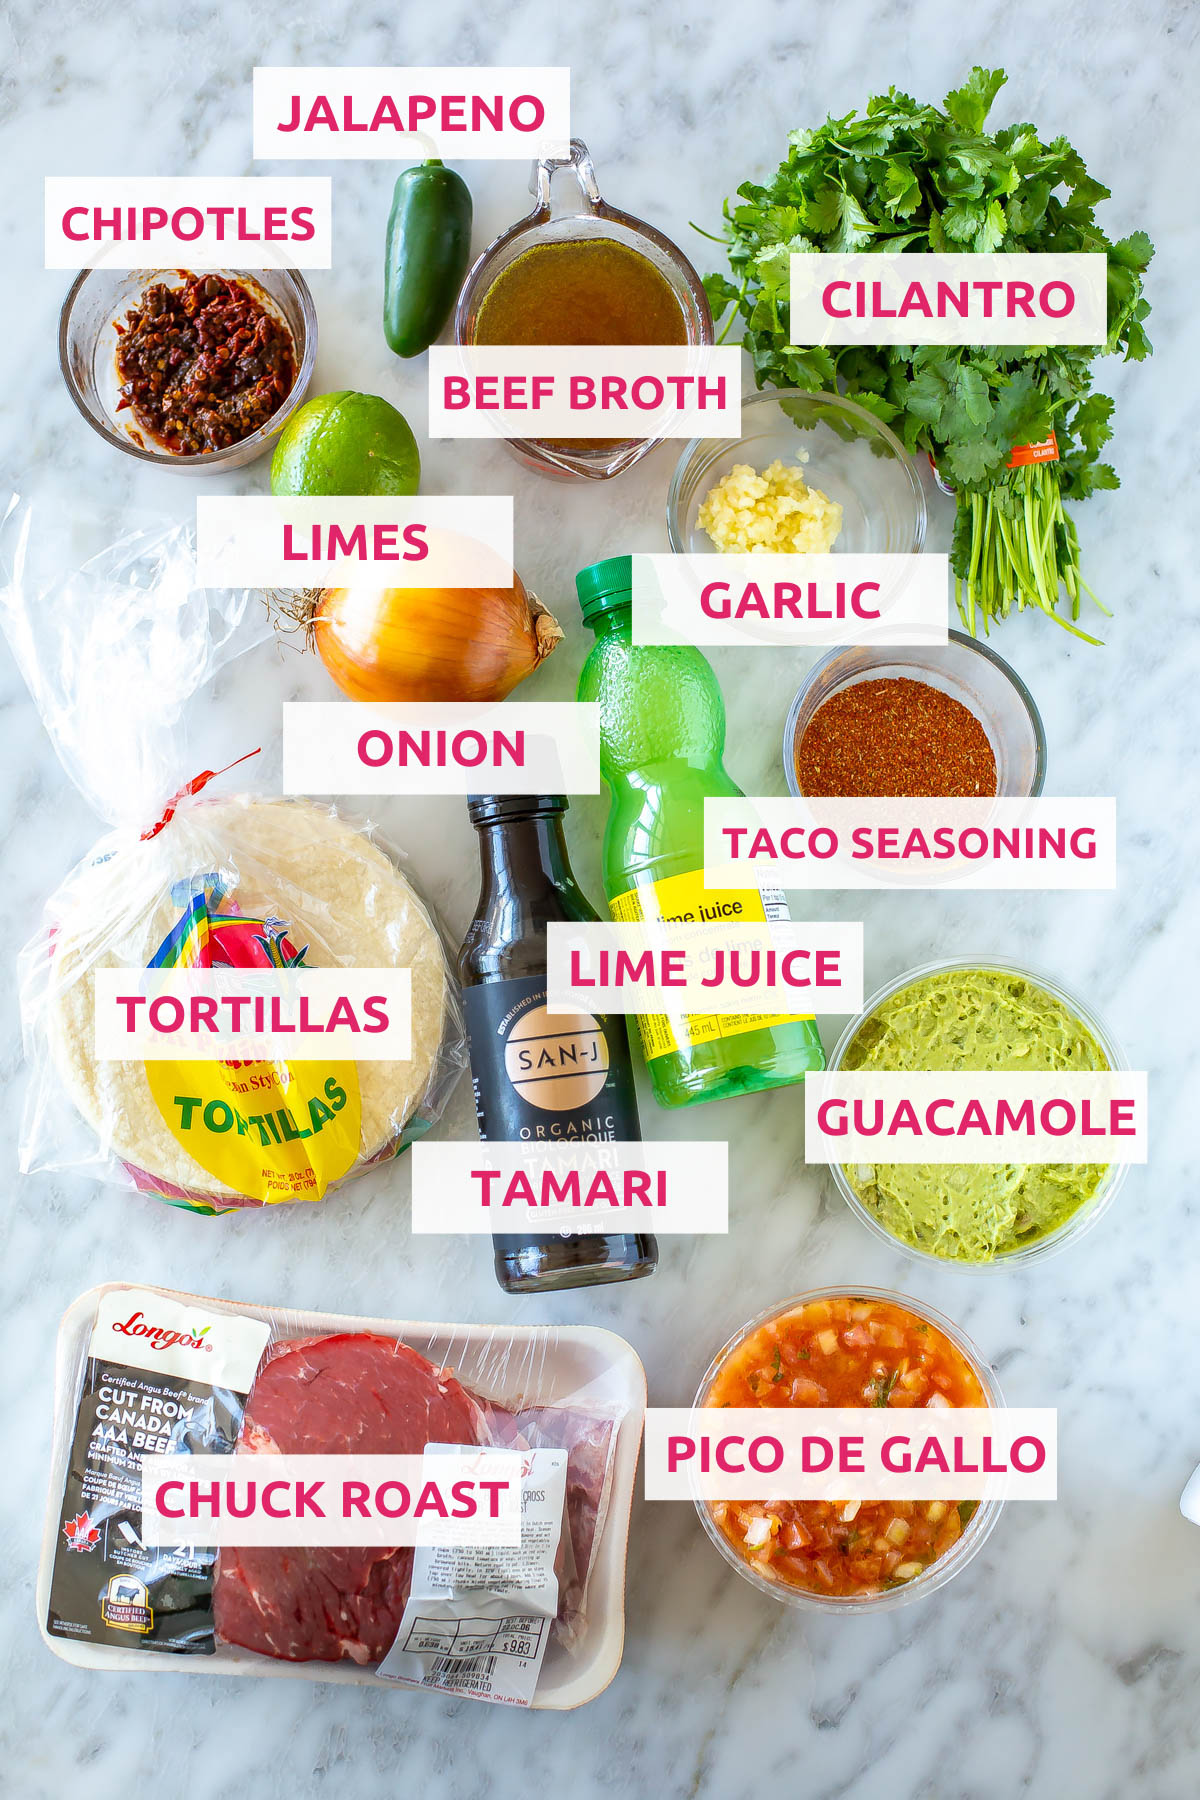 Ingredients for shredded beef taco: chuck roast, pico de gallo, guacamole, tortillas, tamari, lime juice, taco seasoning, cilantro, garlic, chipotles, beef broth, jalapeno, limes and onion.